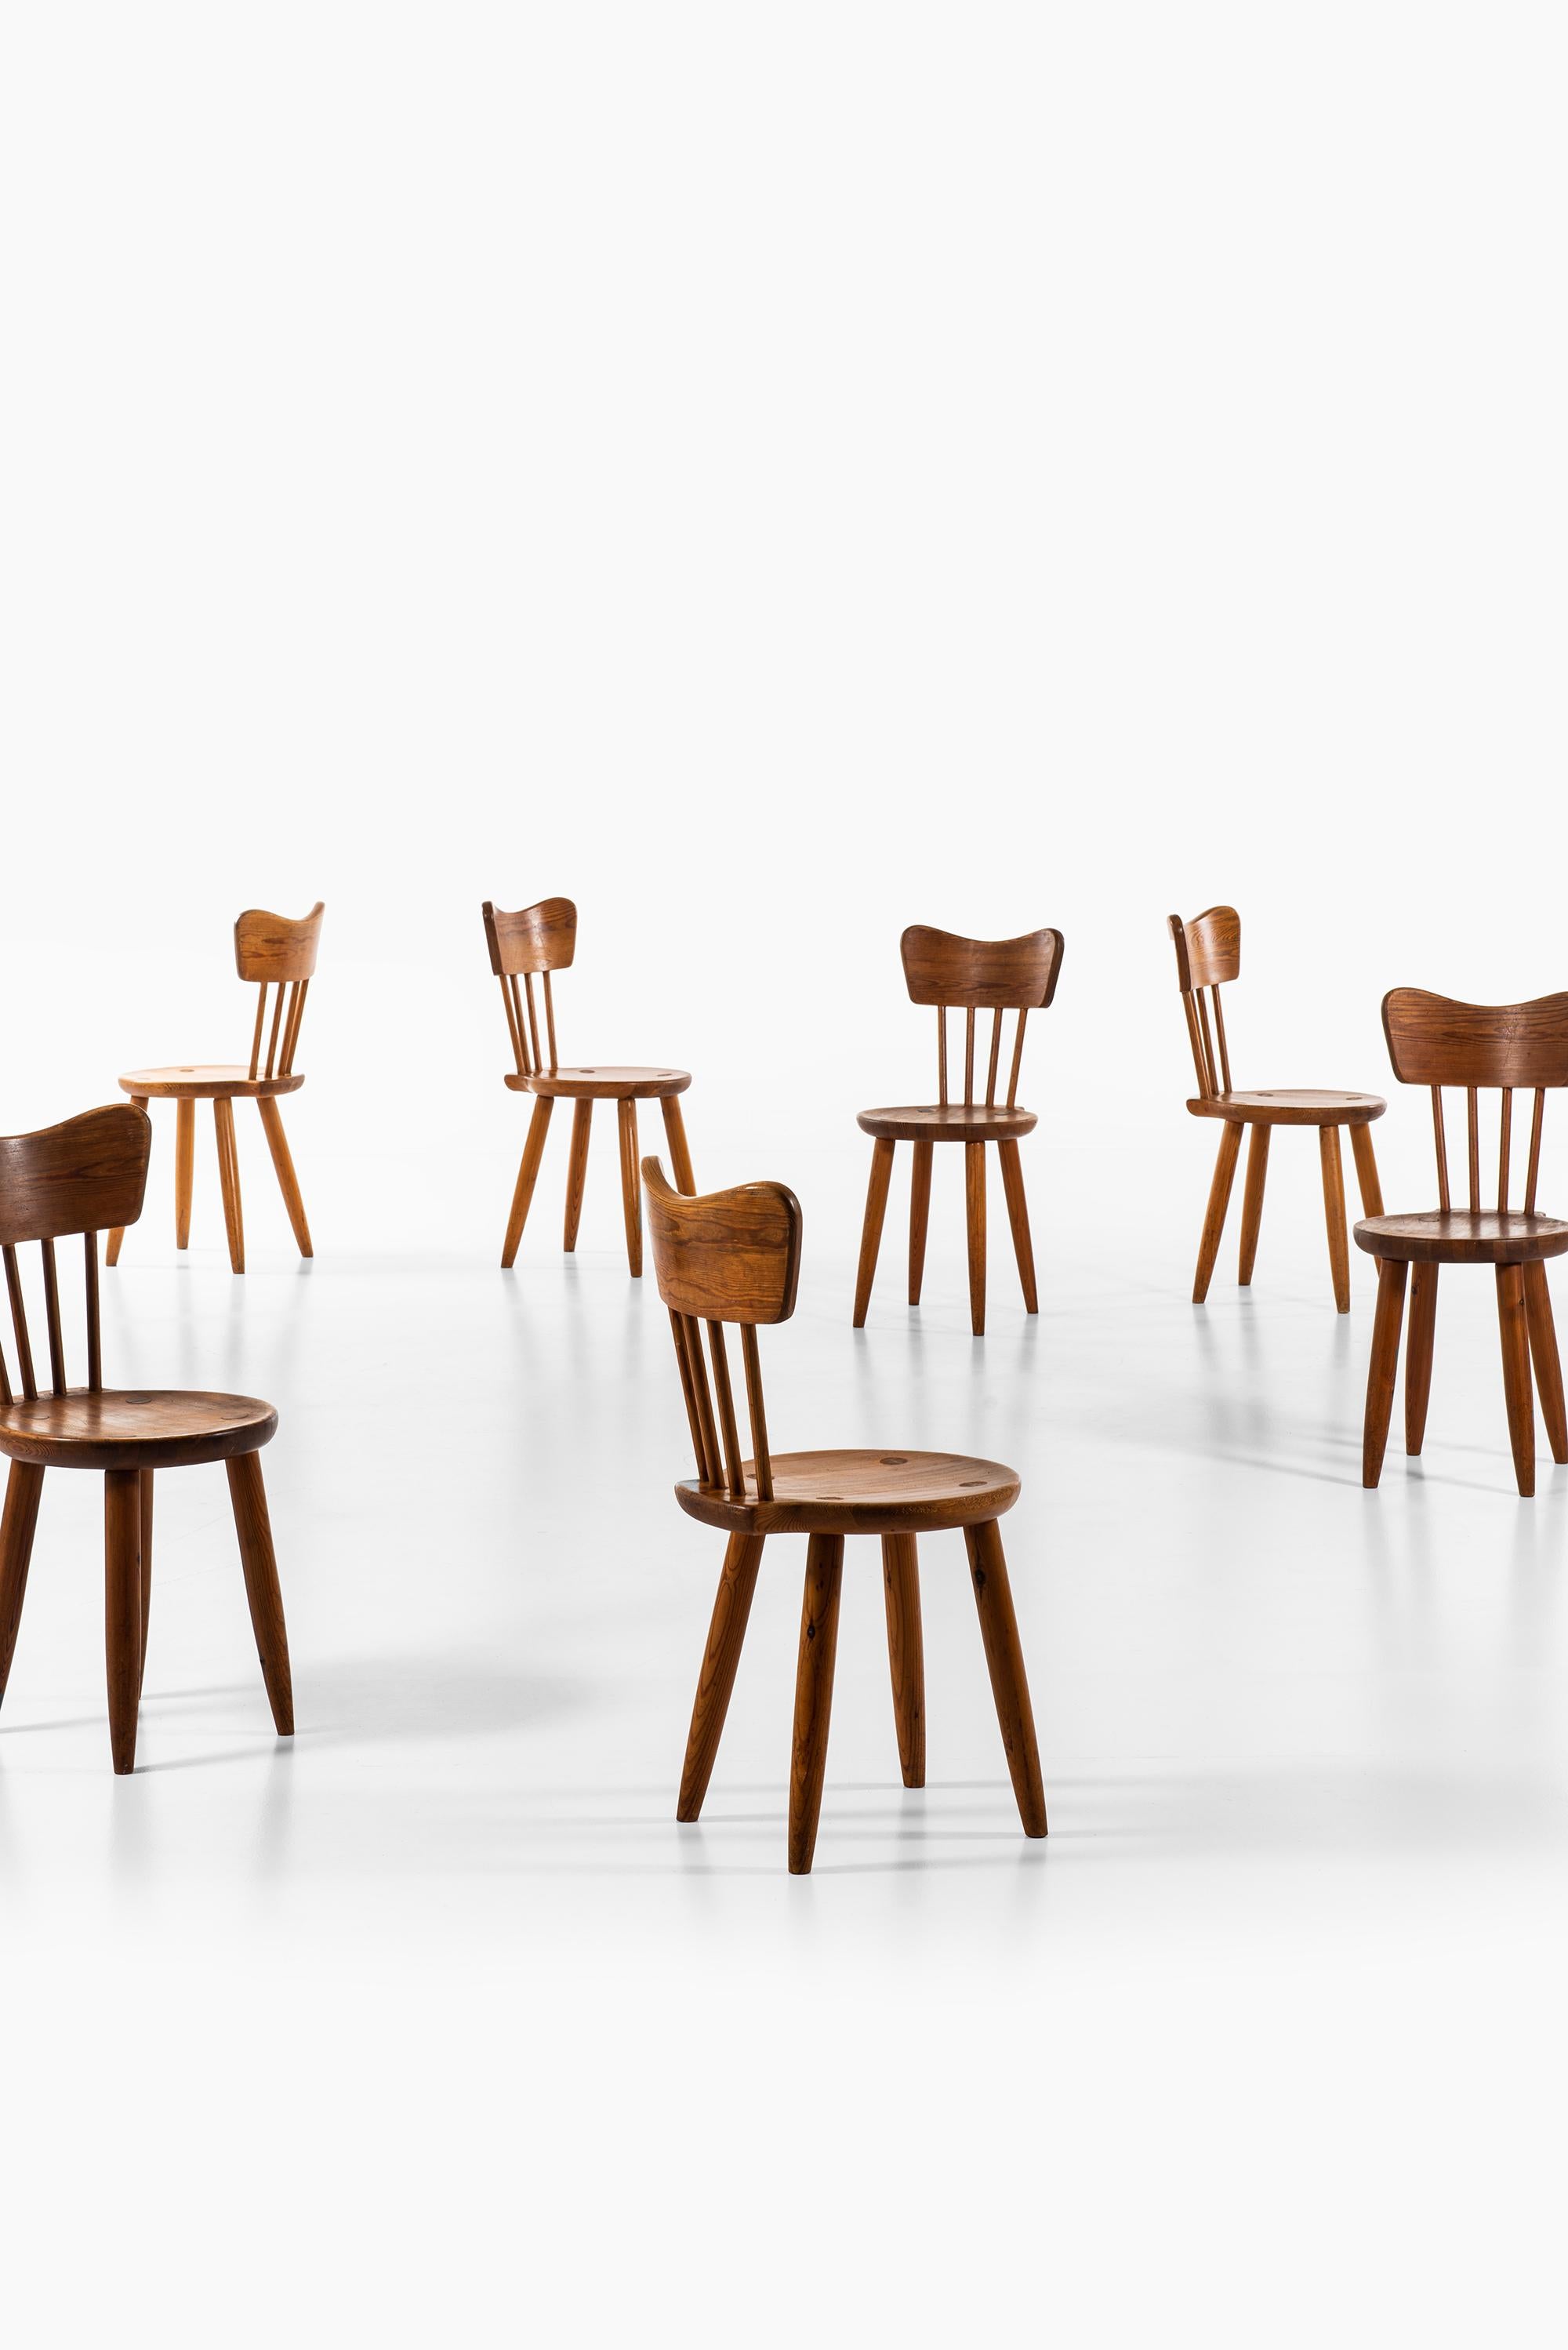 Rare set of 10 dining chairs designed by Torsten Claeson. Produced by Steneby Hemslöjd in Sweden. Retailed at Meeths in Gothenburg, Sweden.